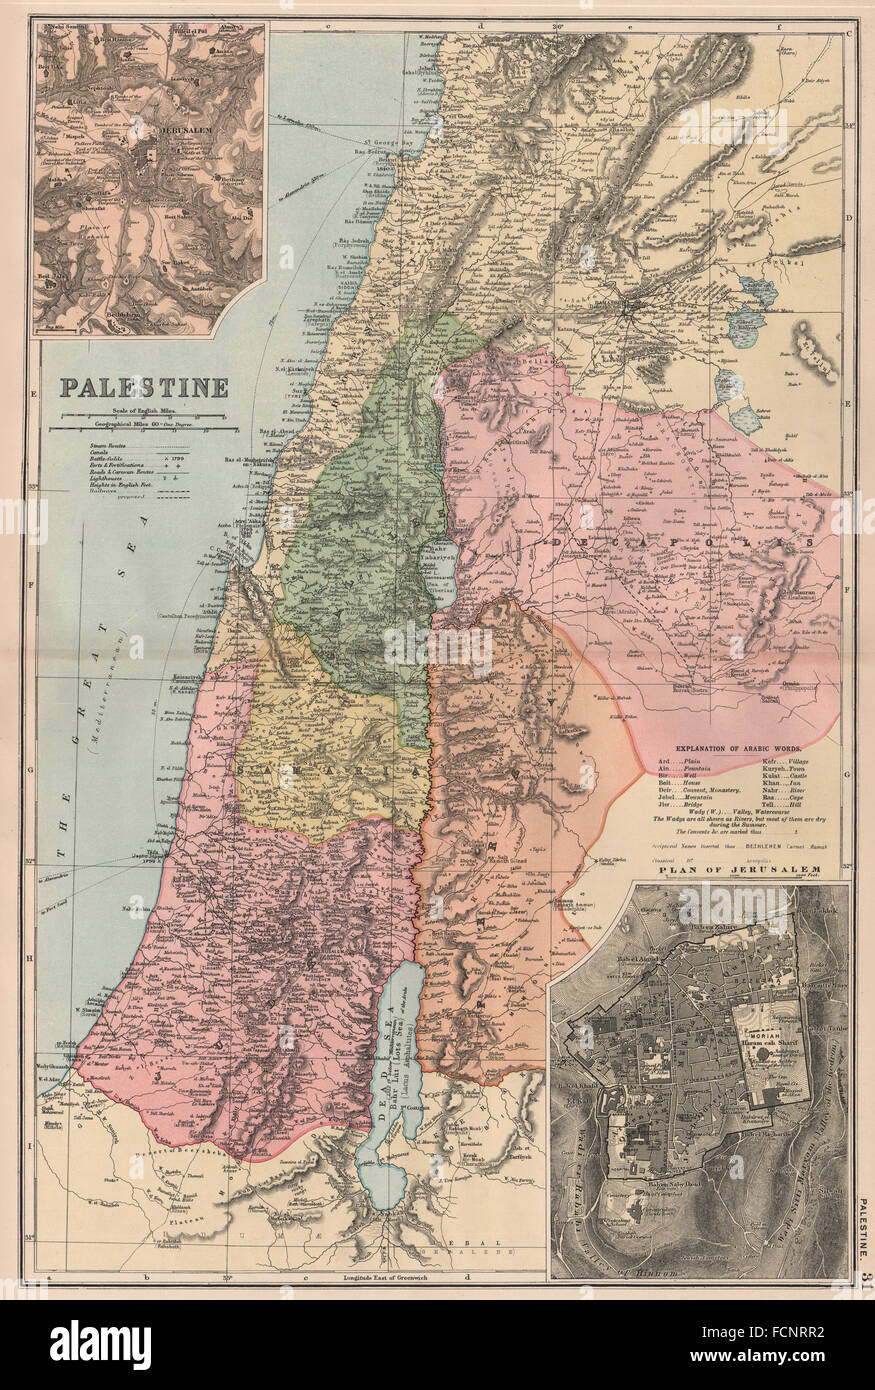 PALESTINE: Shows battlefields dates. Israel Jordan. Jerusalem. BACON, 1893 map Stock Photo